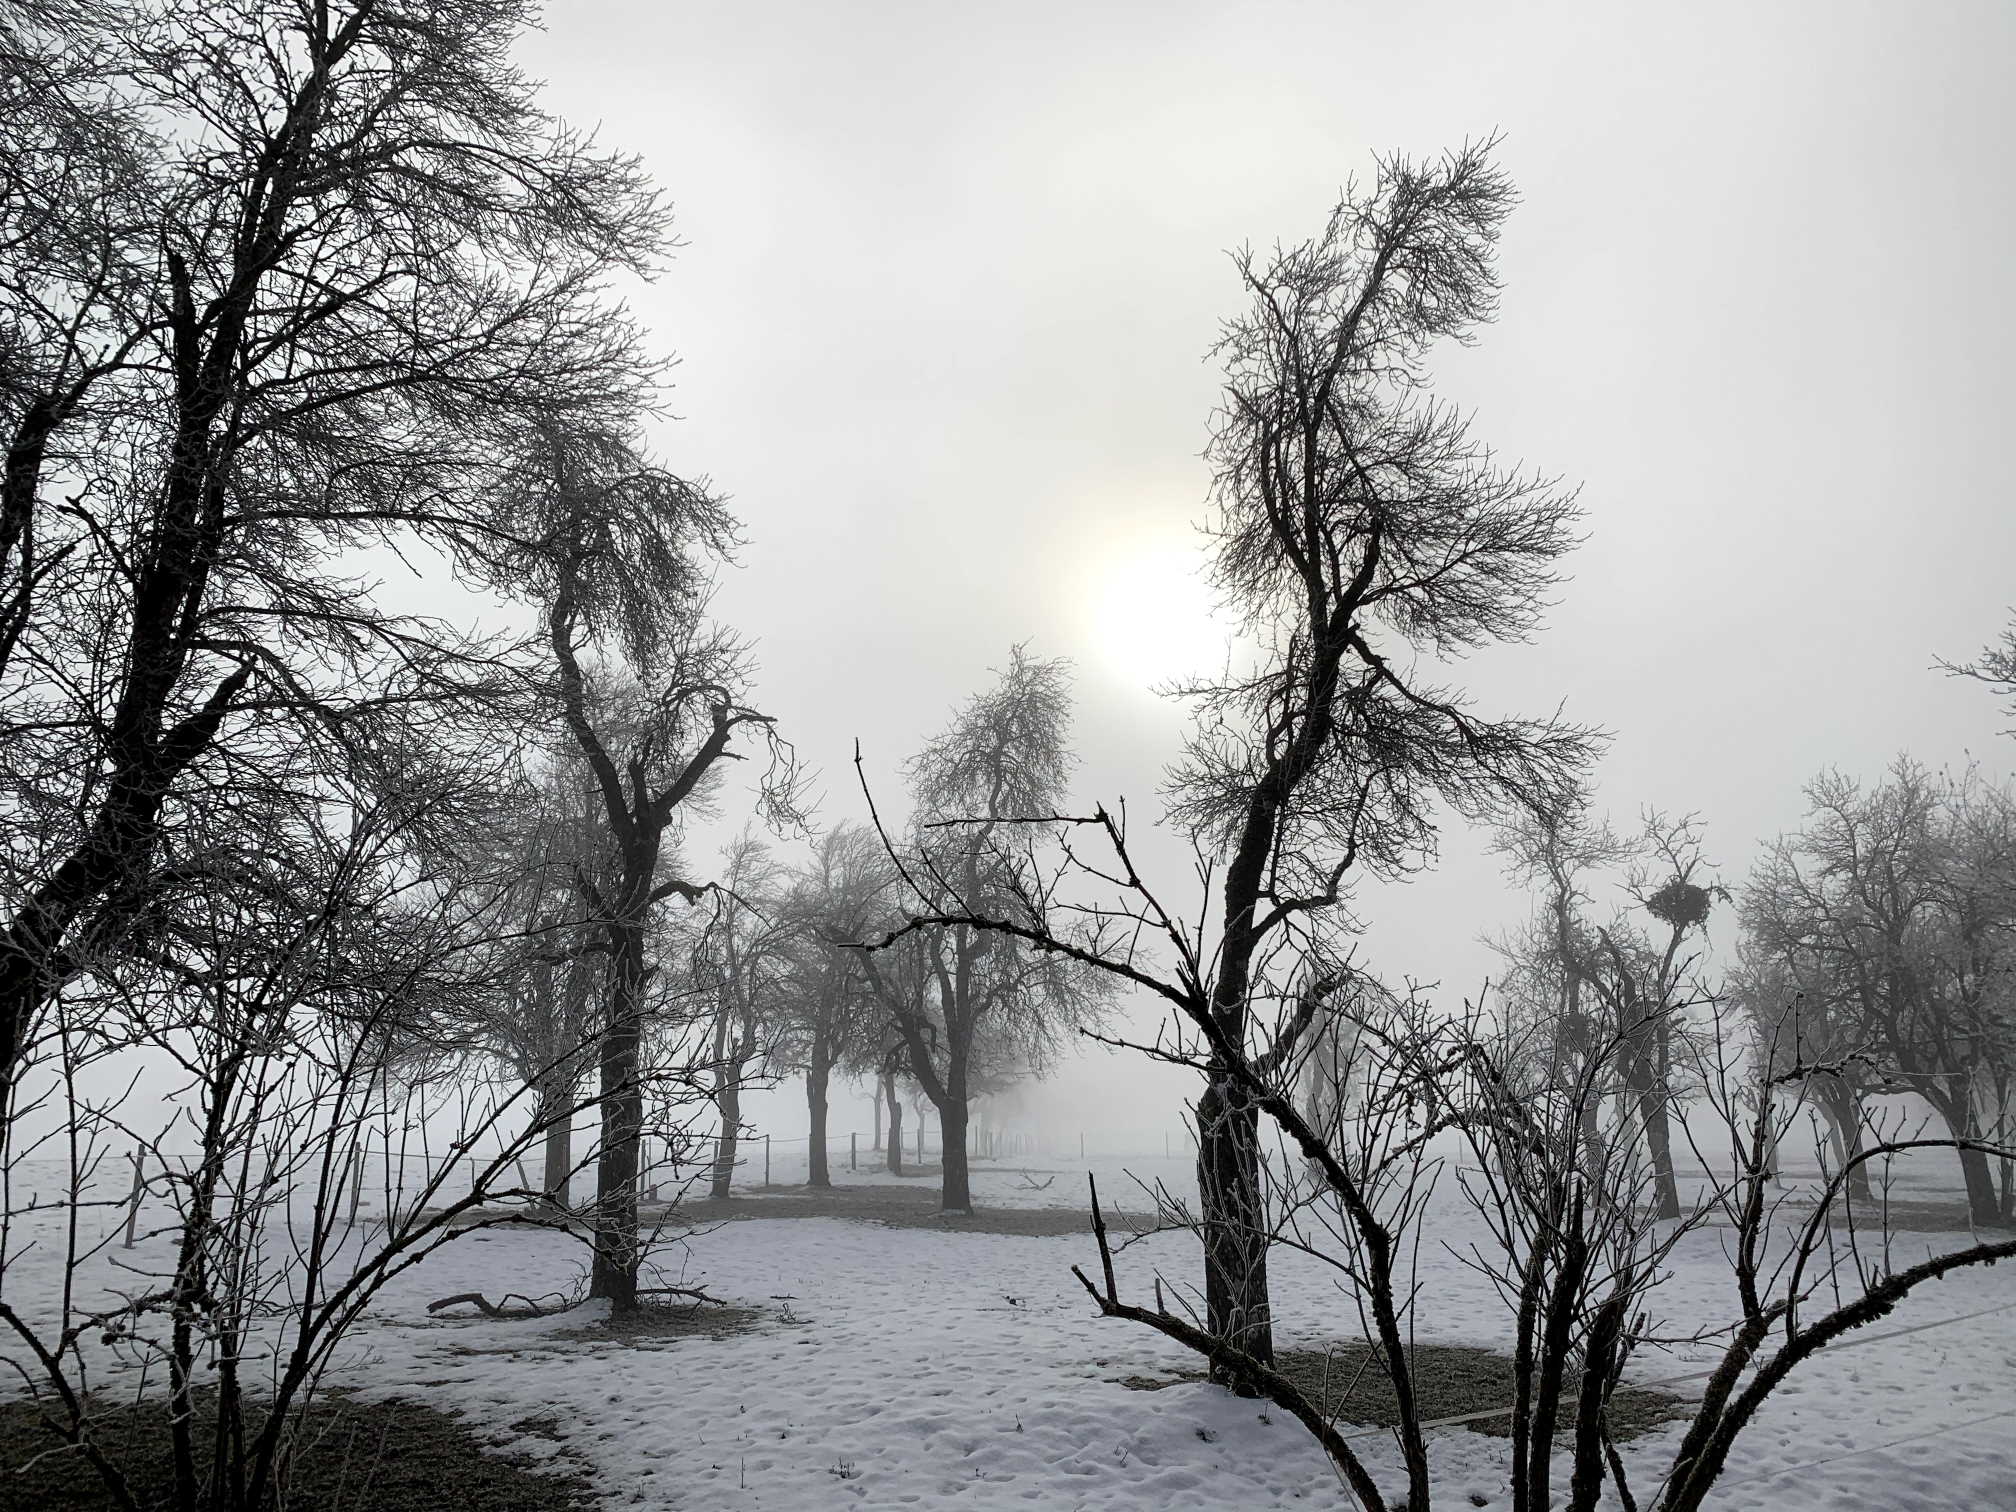 Bäume ohne Blätter im Winter bei Nebel